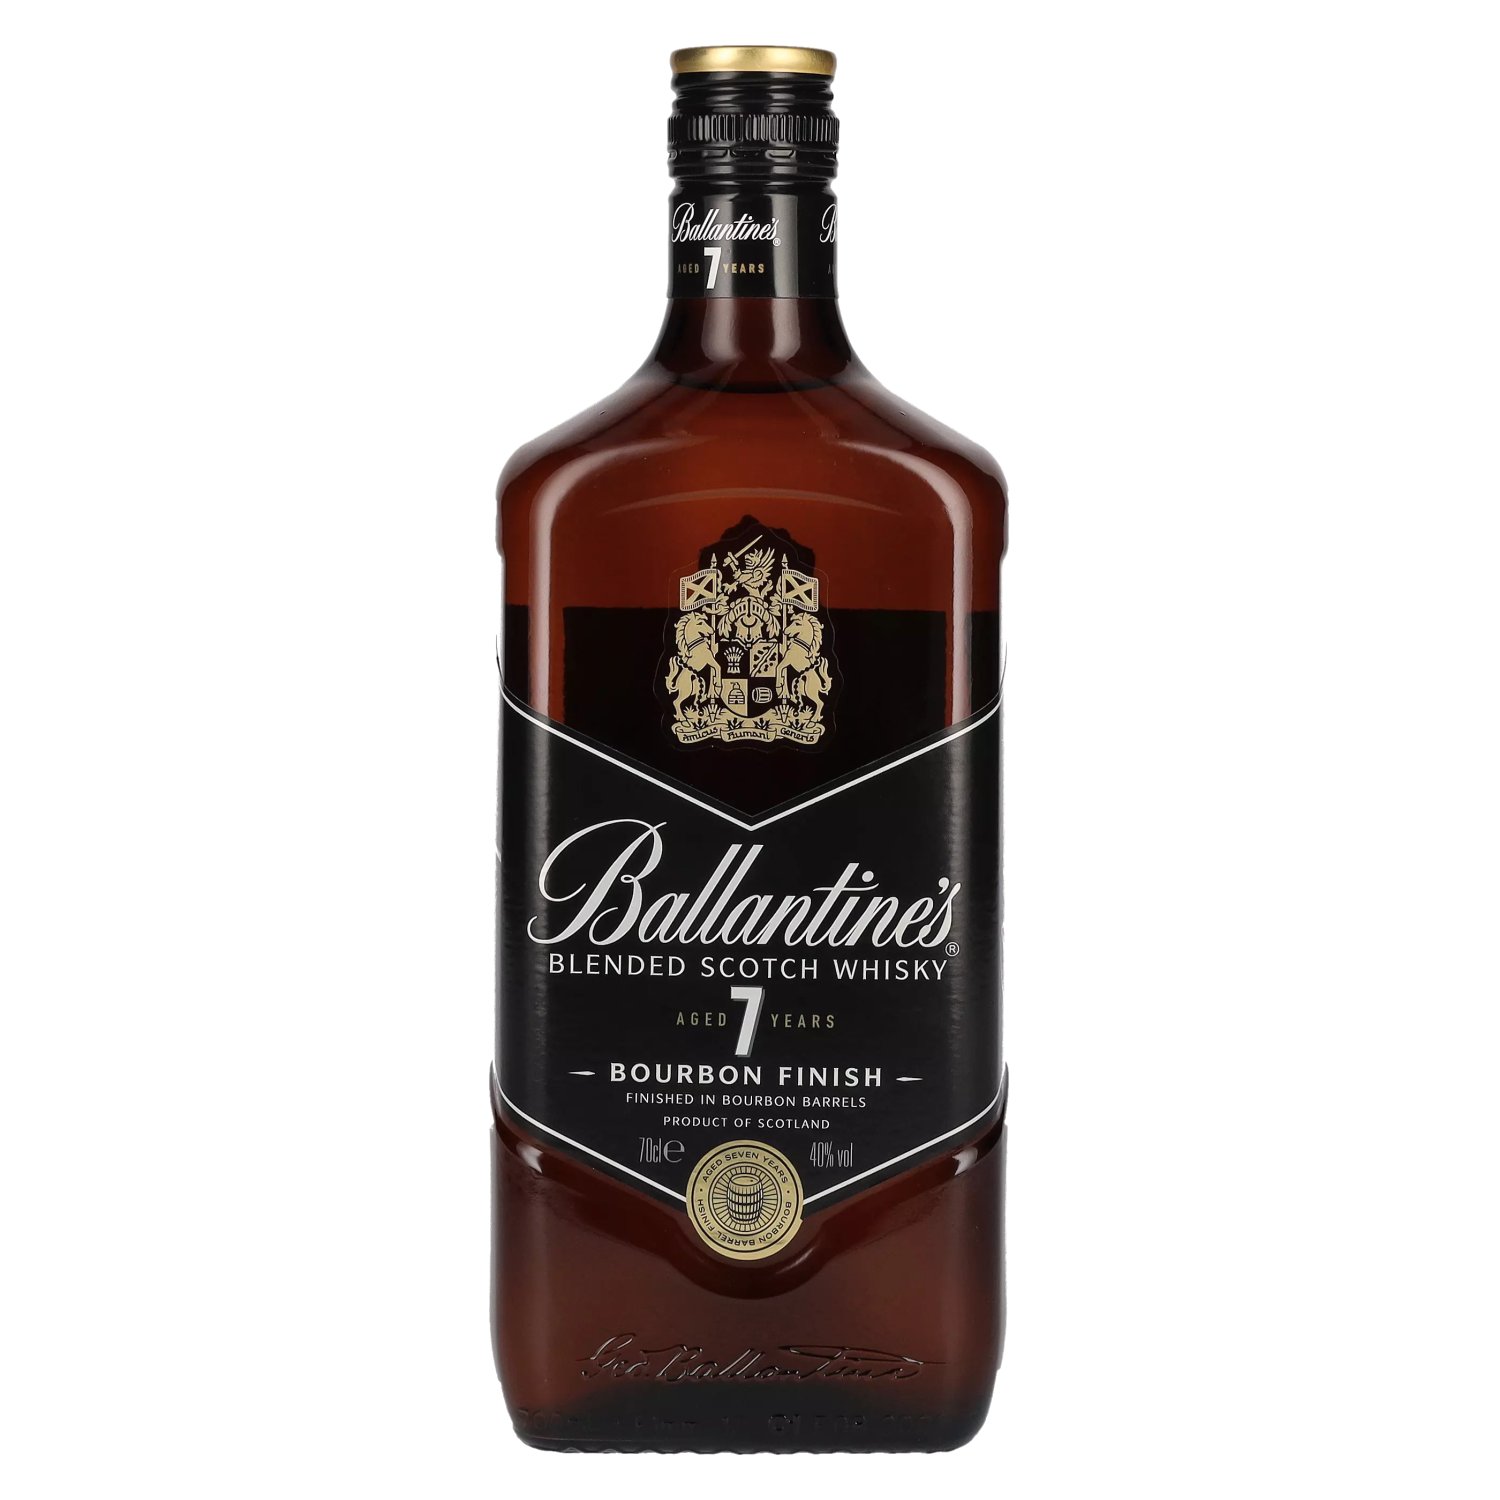 Ballantines Blended Scotch Whisky 1000 ml